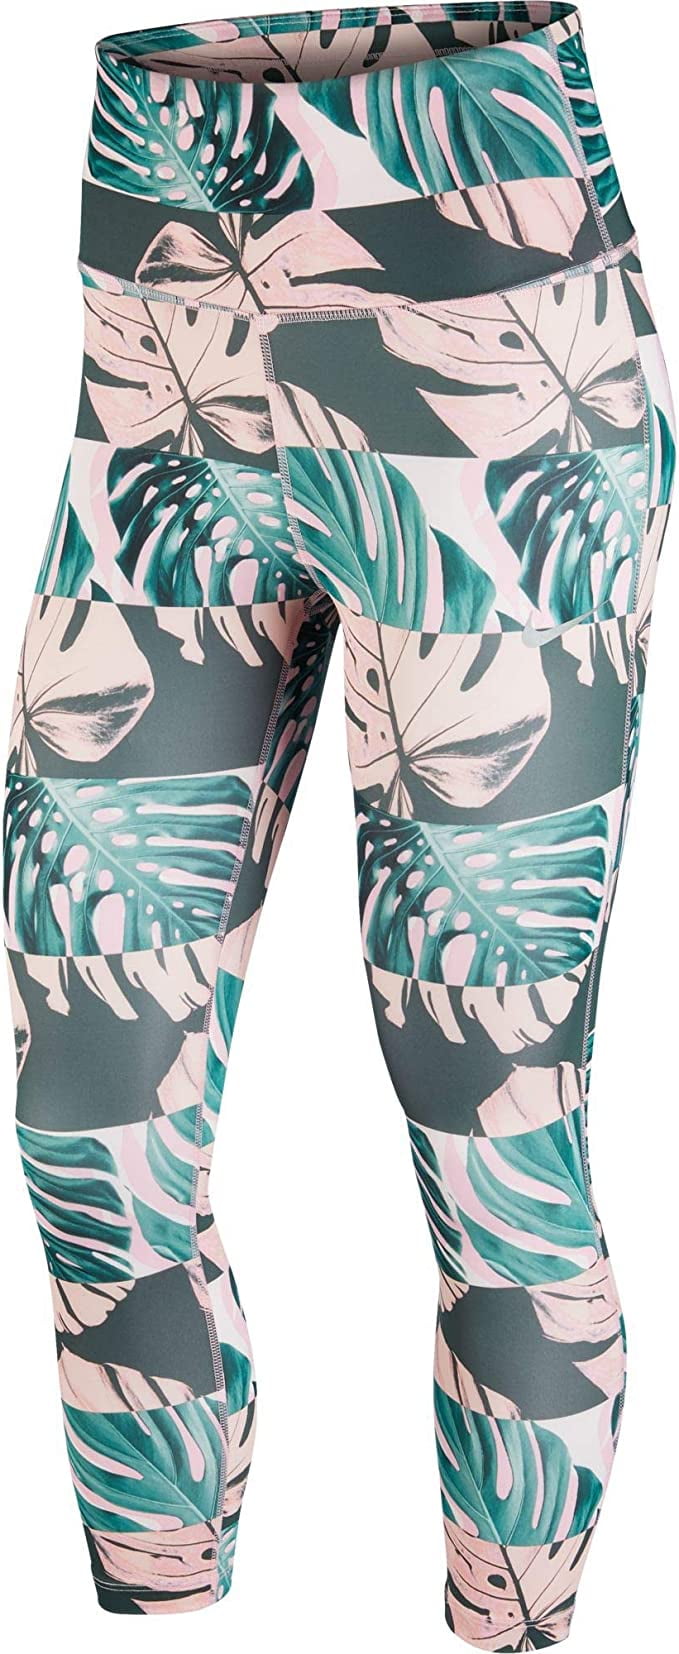 Nike Dry Women's Botanical Print Fast Crop Tight fit Leggings CJ2162 654  Size Small 